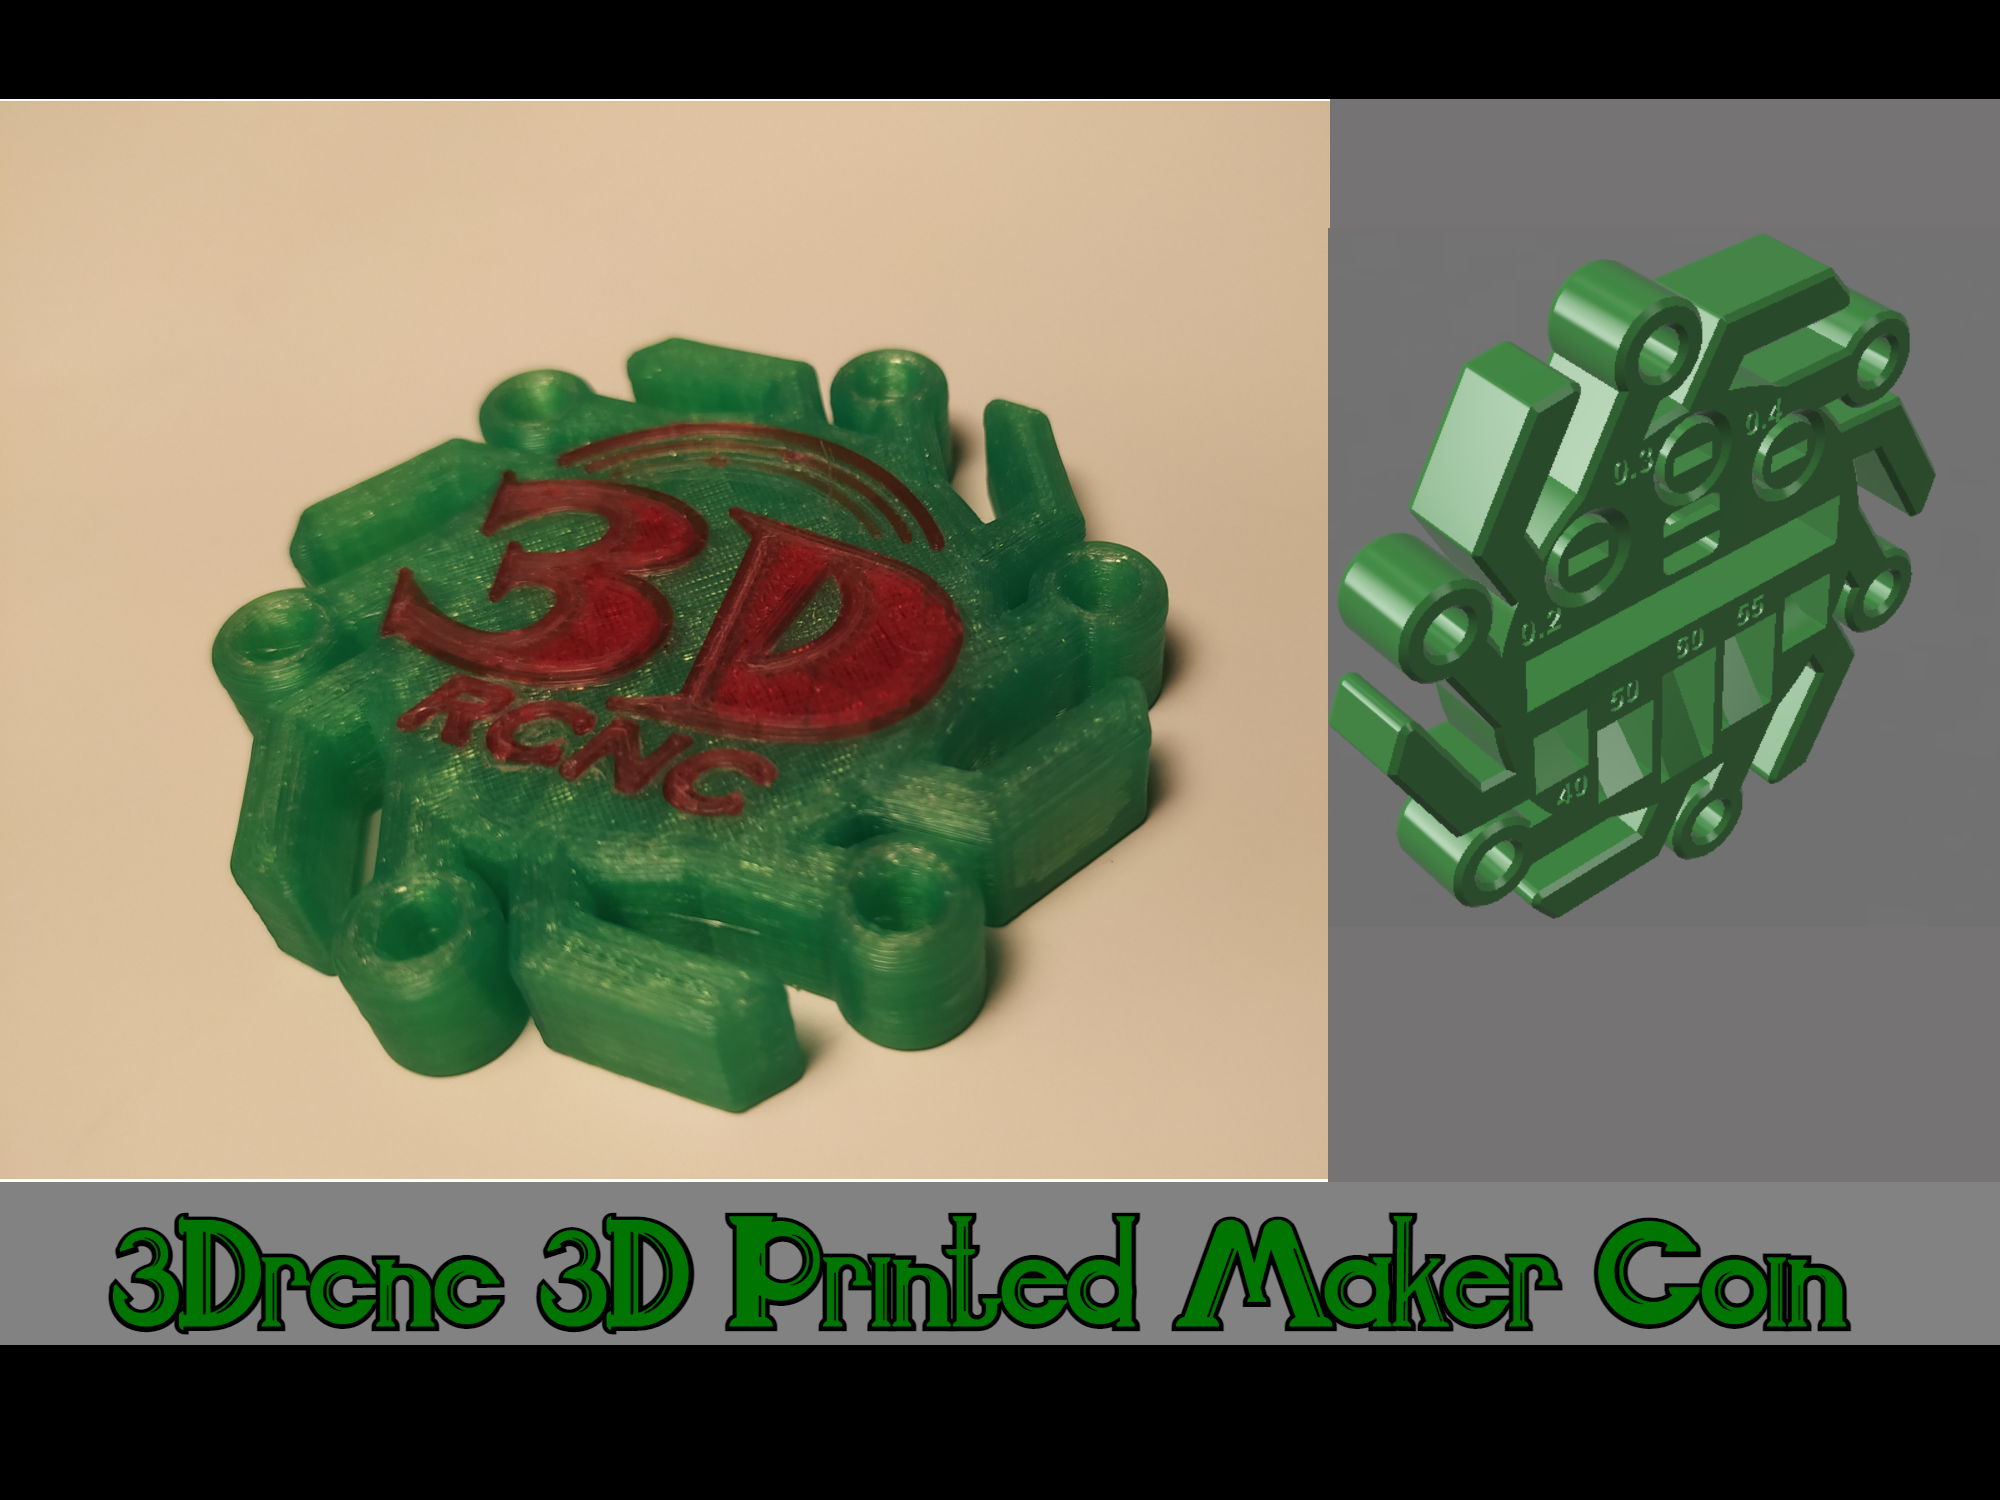 3Drcnc Maker Coin with inbuilt 3D Printer Tests.